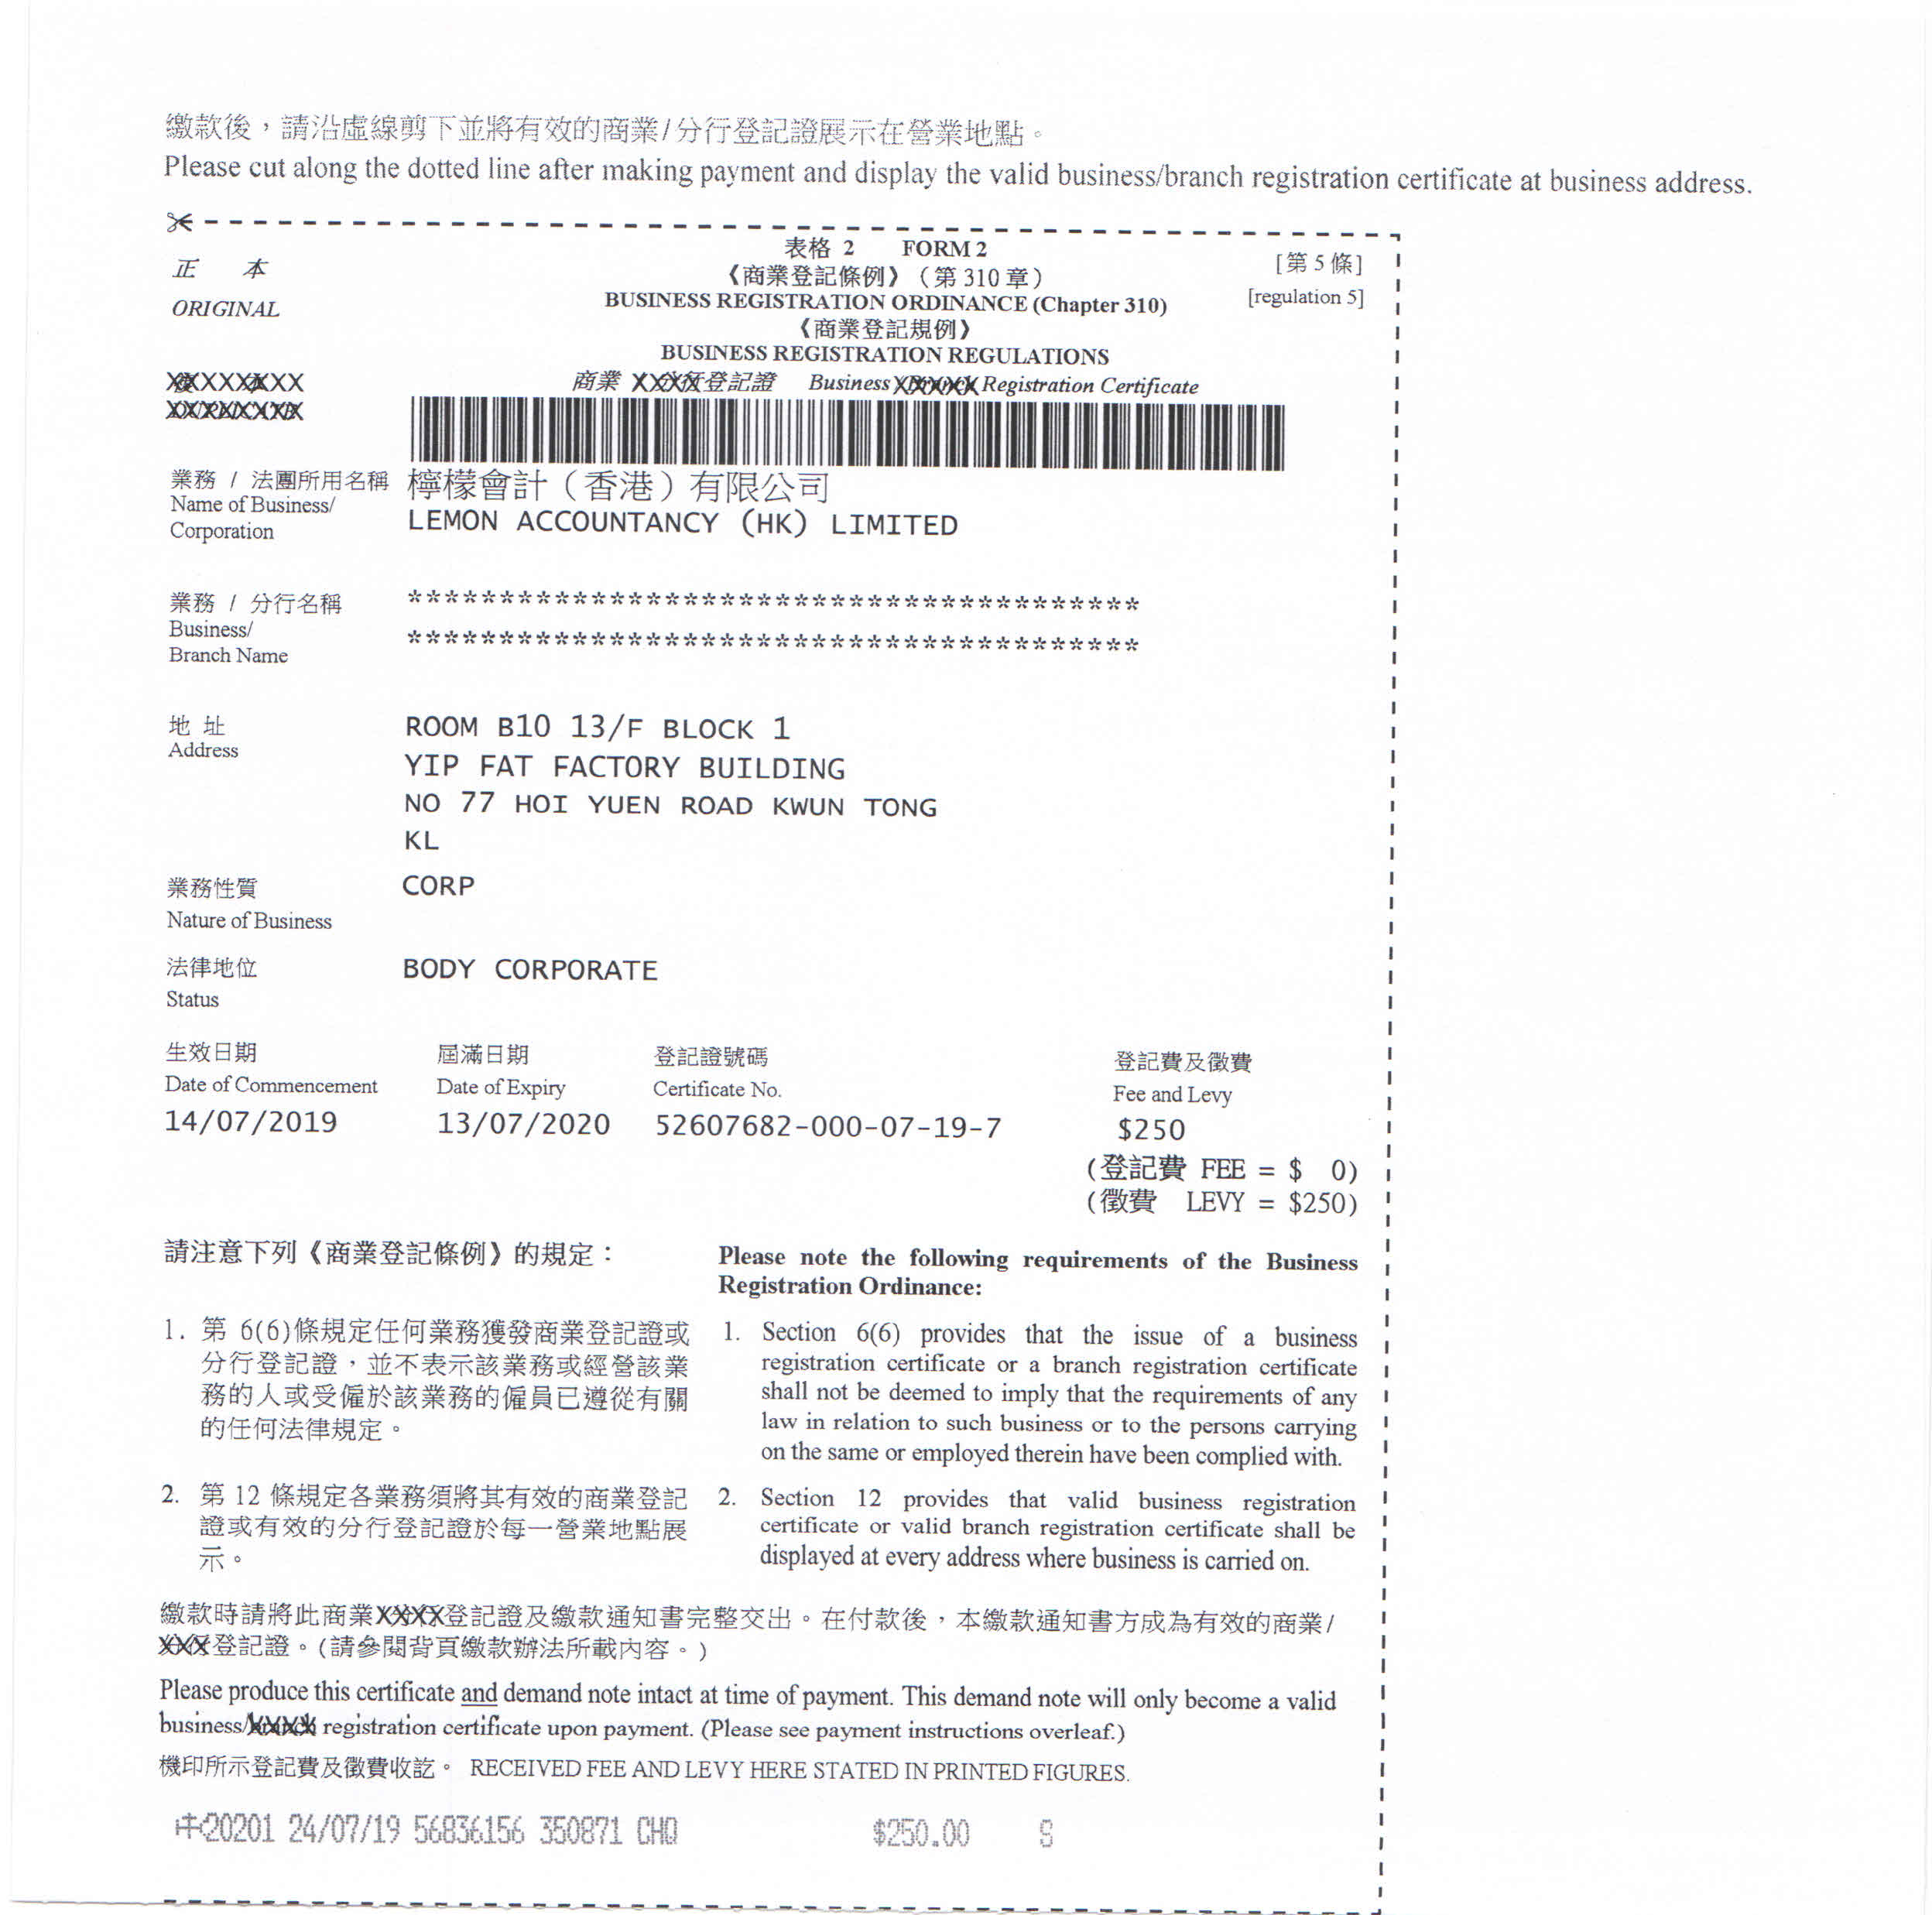 Business Registration Certificate (HK) of Lemon Accountancy